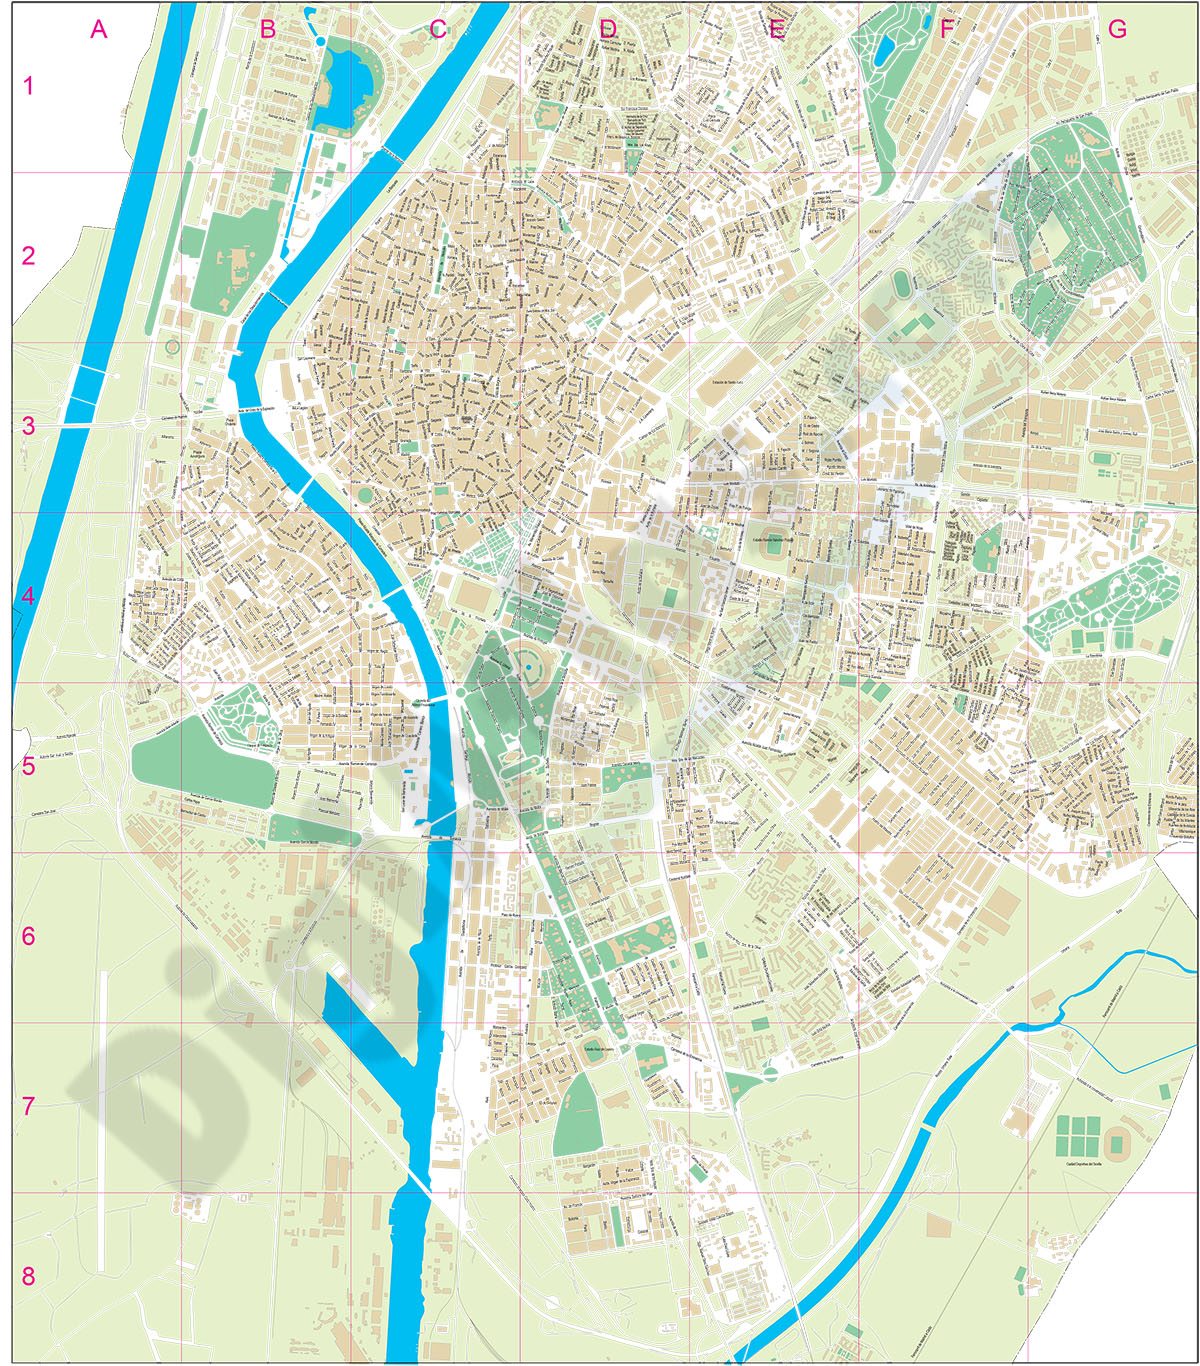 Sevilla - city map